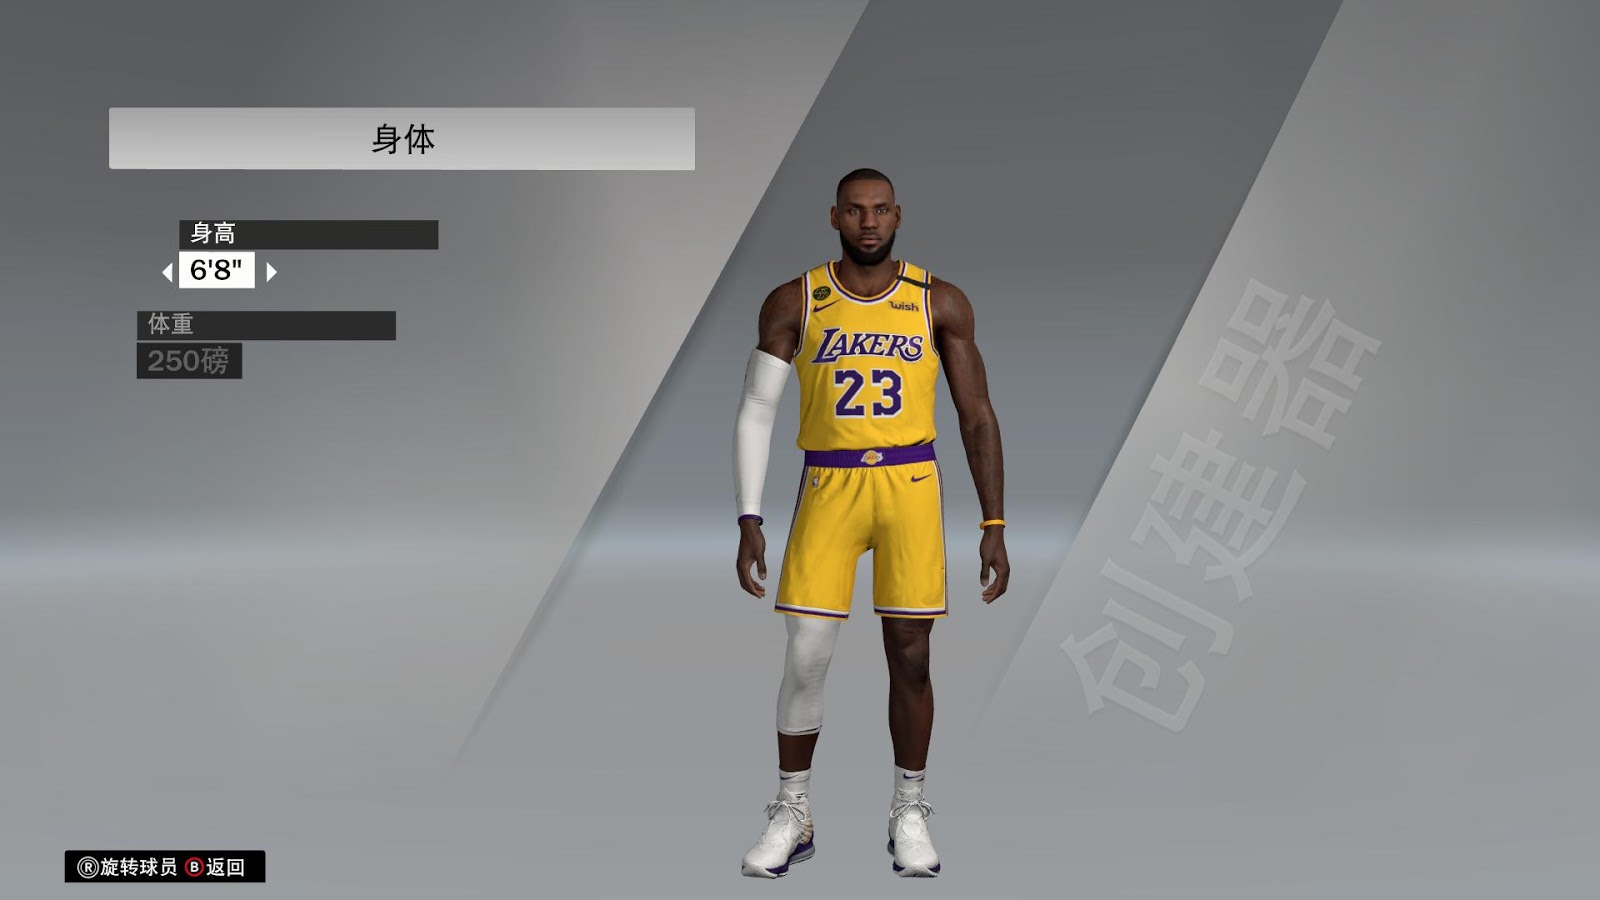 NBA 2K20 Lebron James Cyberface and Body Model v3.0 By Awei - Shuajota